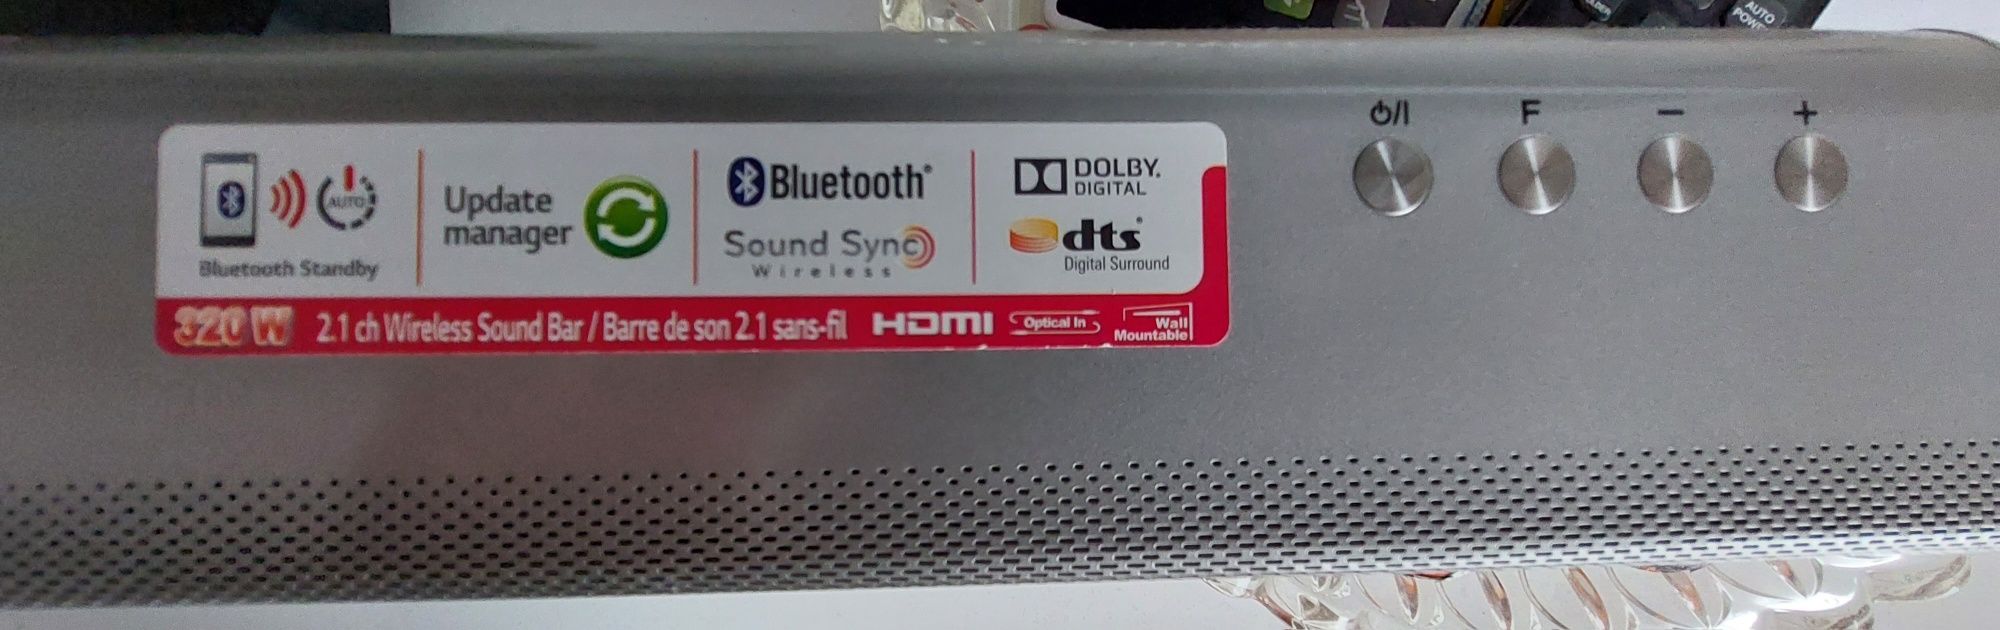 LG LAS550H -  Bezprzewodowy soundbar